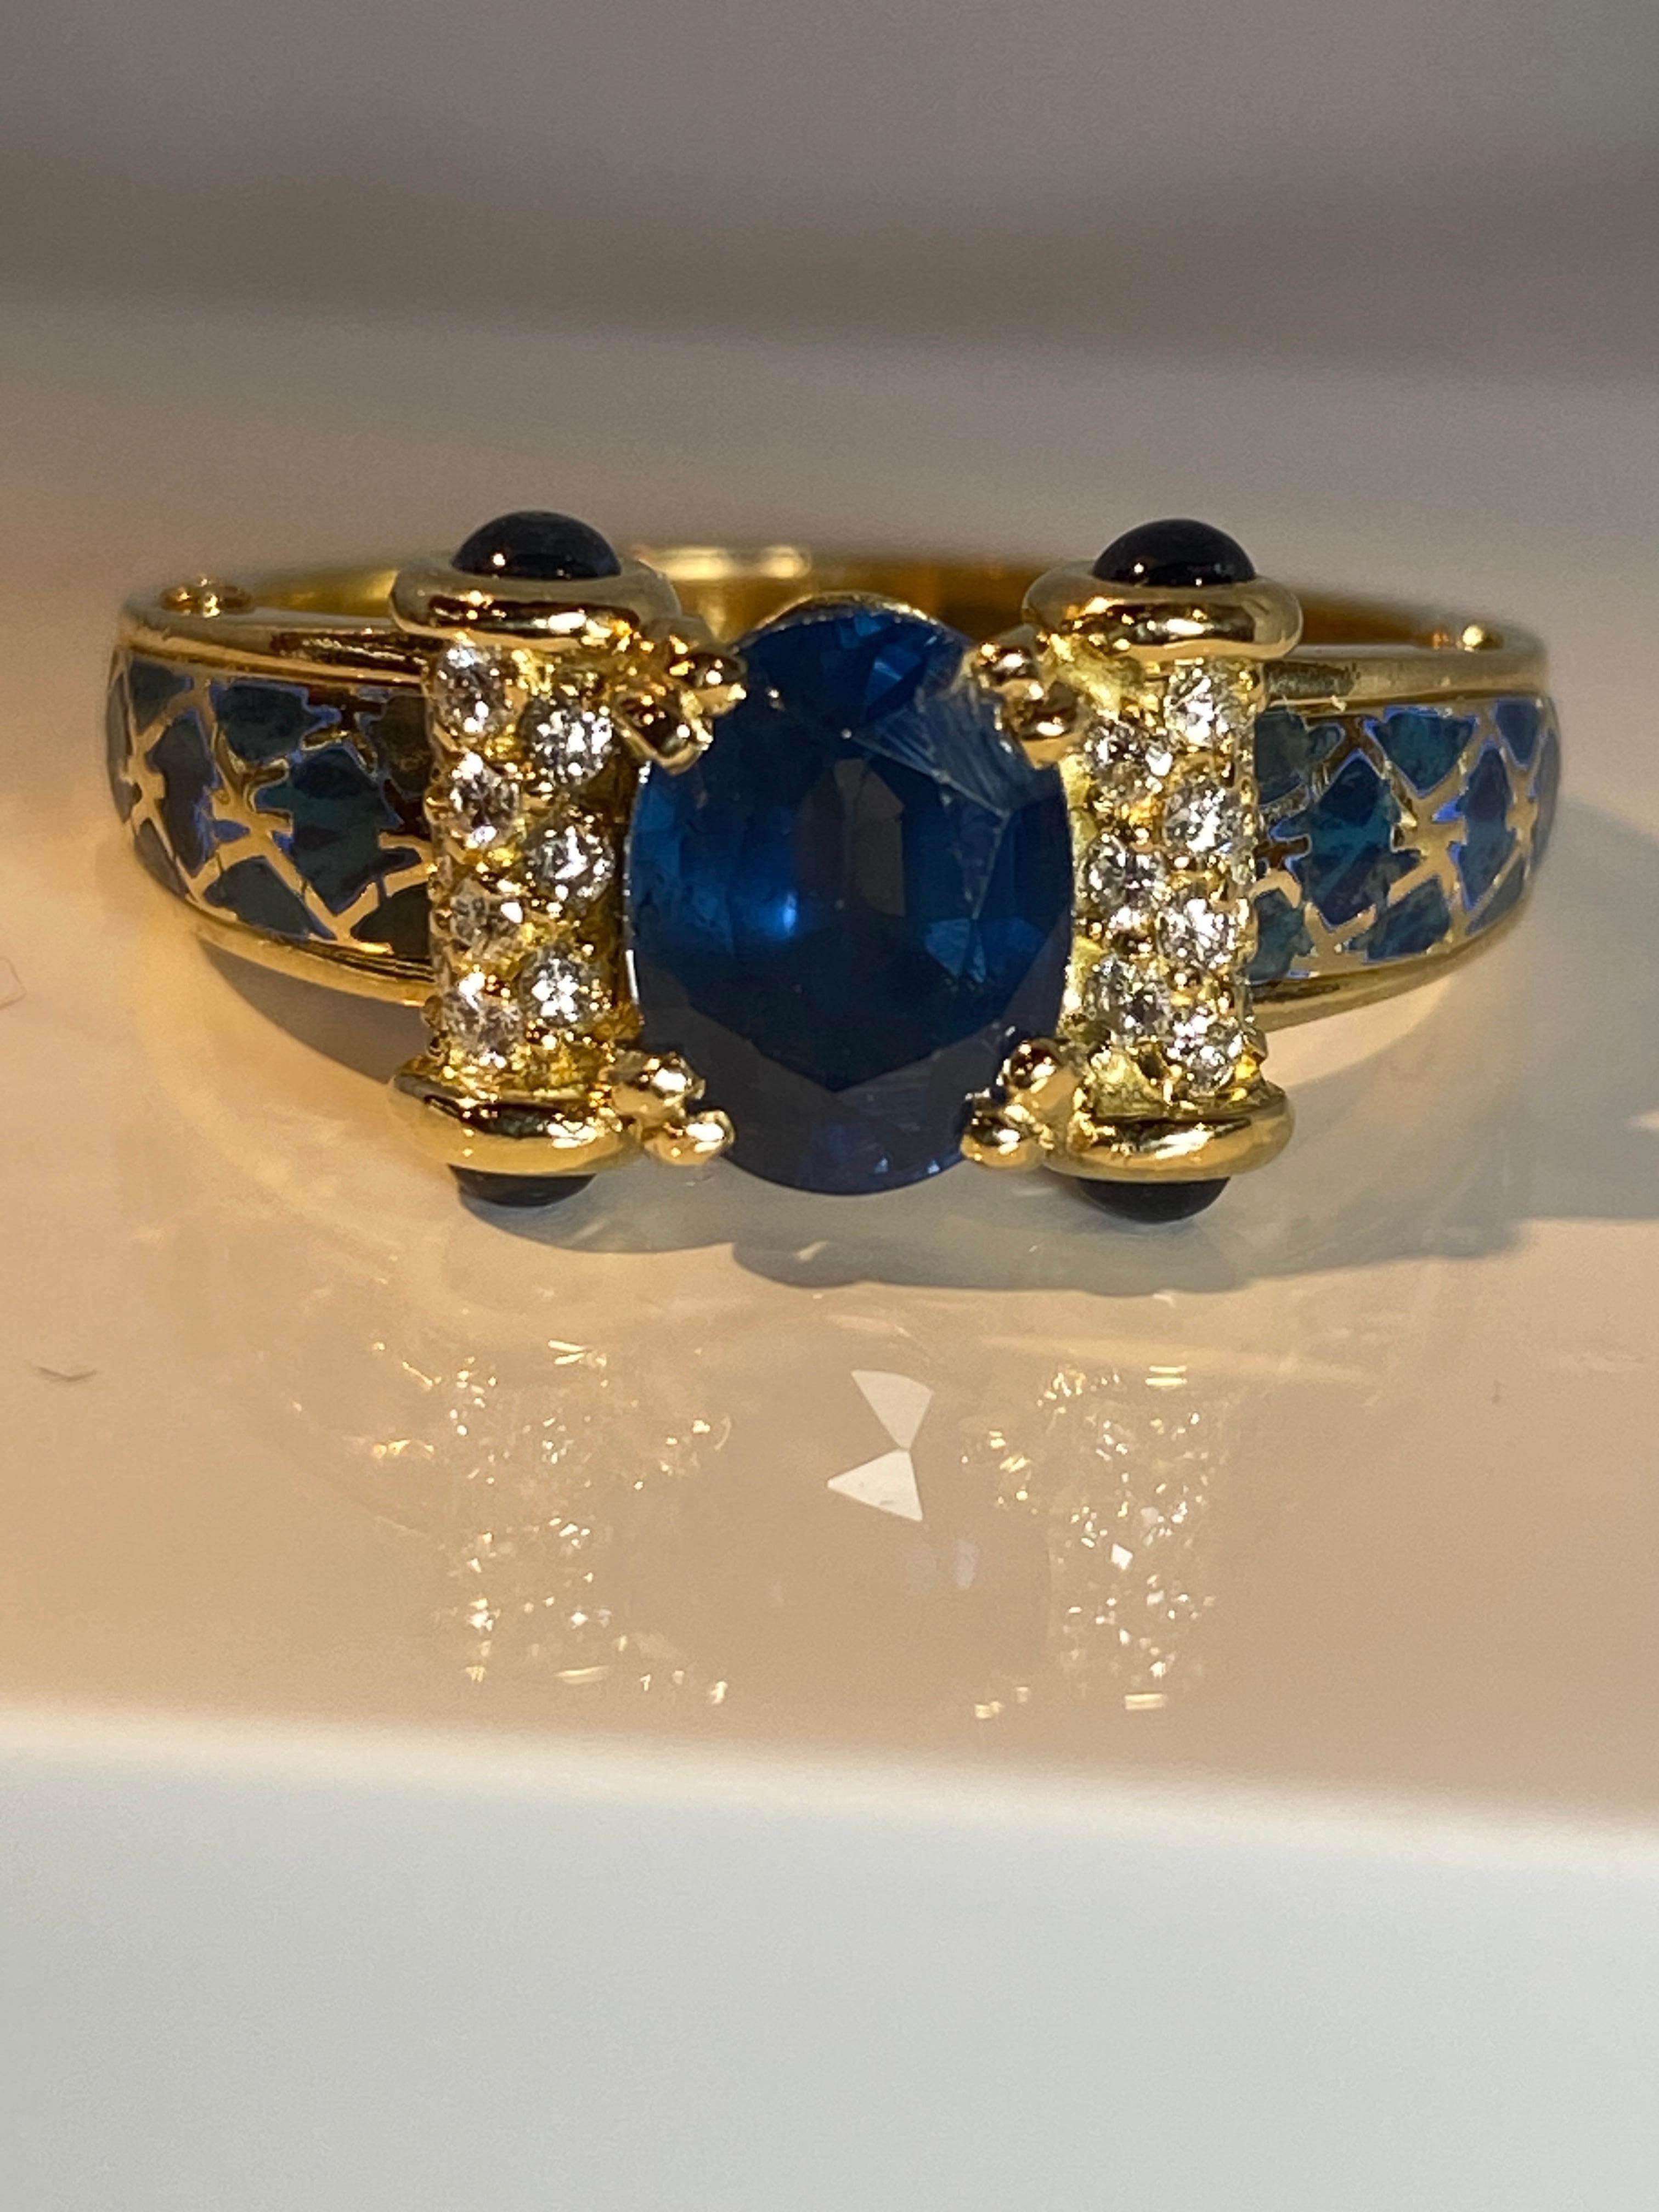 Korloff Ring in 18 Carat Gold: Sapphires, Diamonds, Blue Enamel For Sale 1